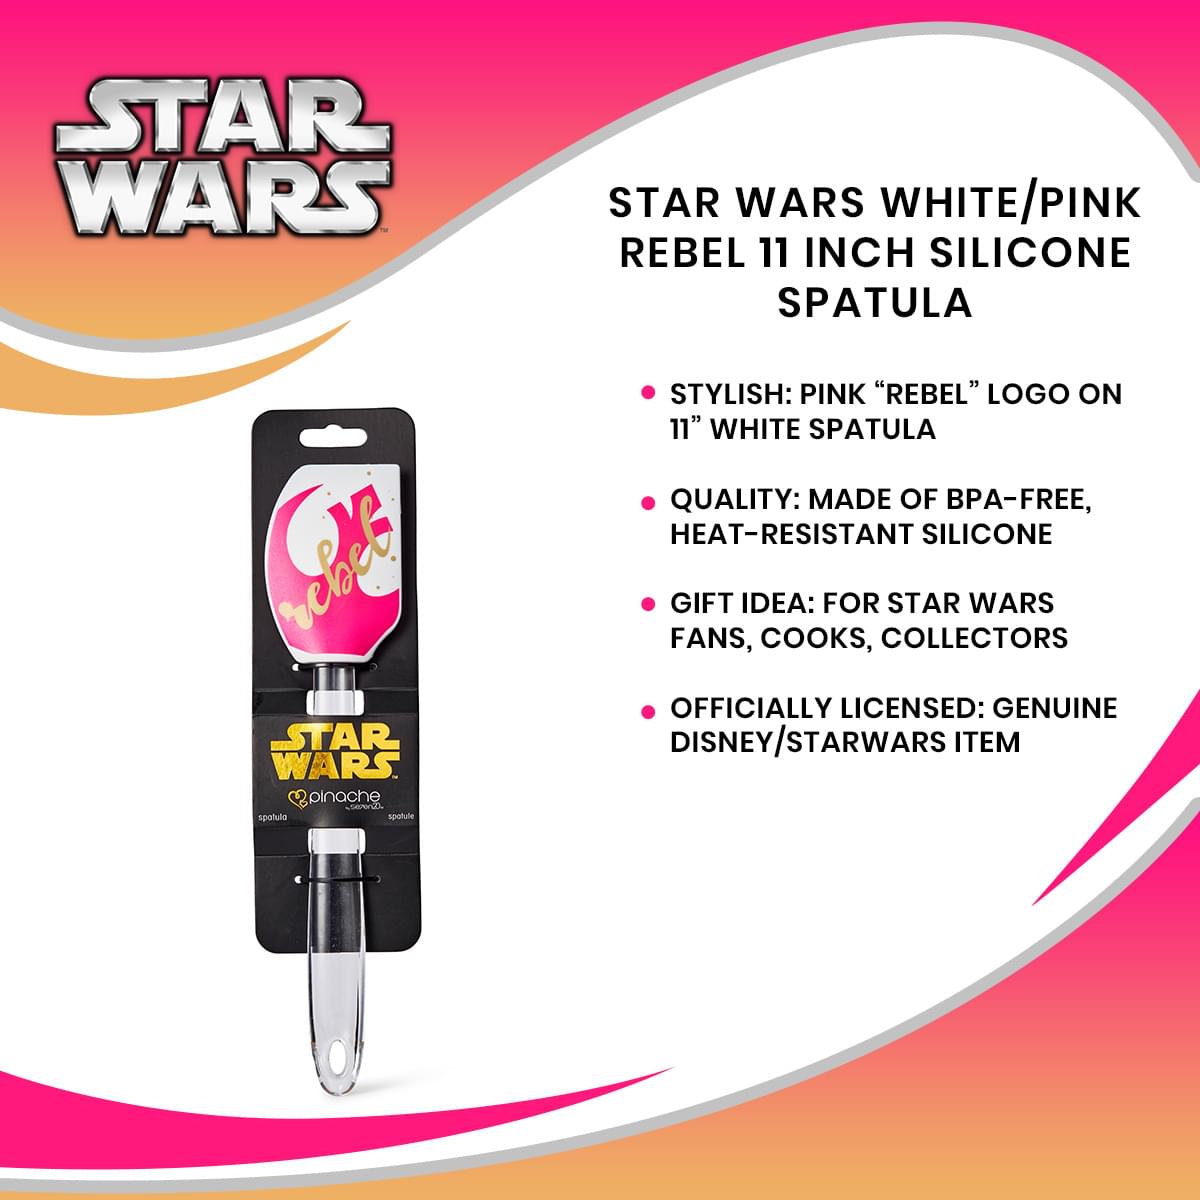 Star Wars White/Pink Rebel 11 Inch Silicone Spatula